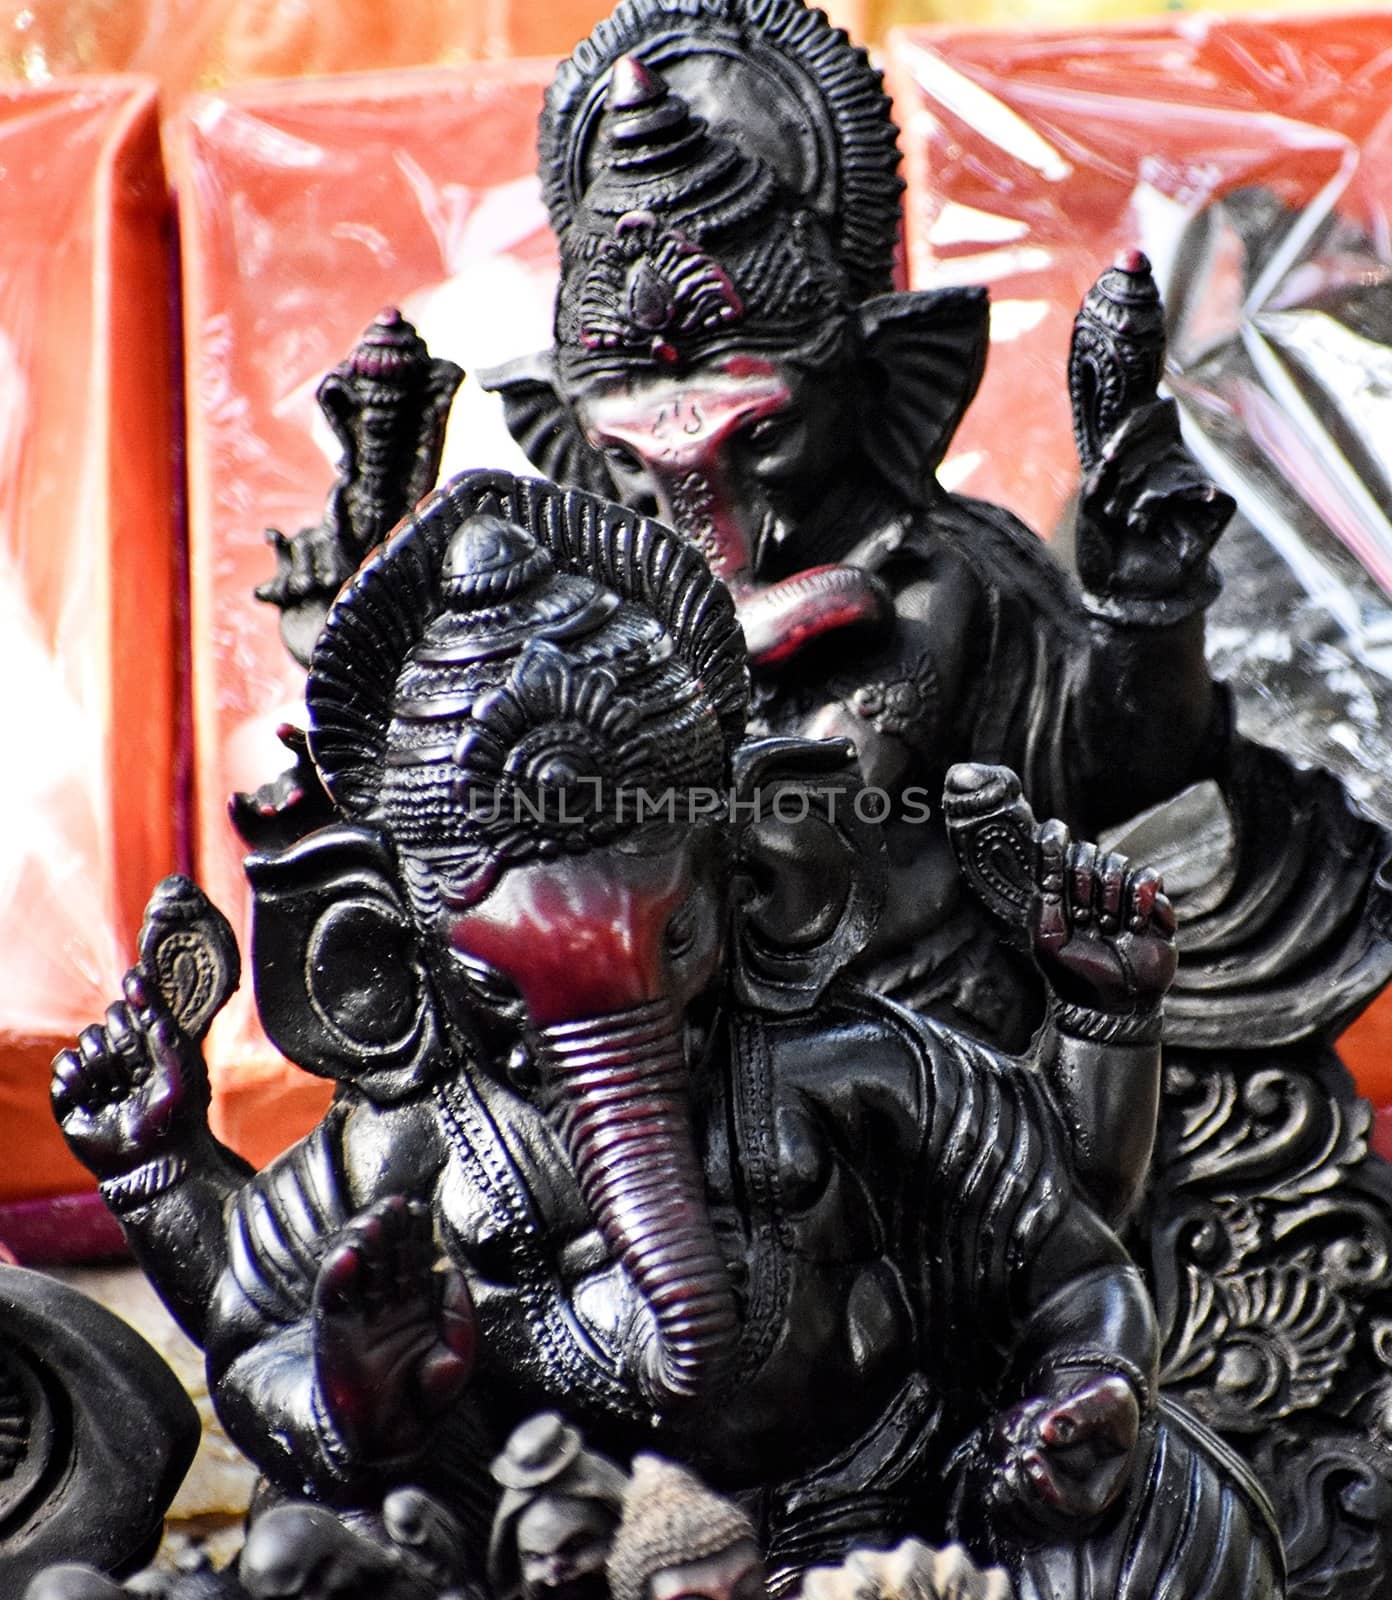 Images for sculpture of god by ravindrabhu165165@gmail.com